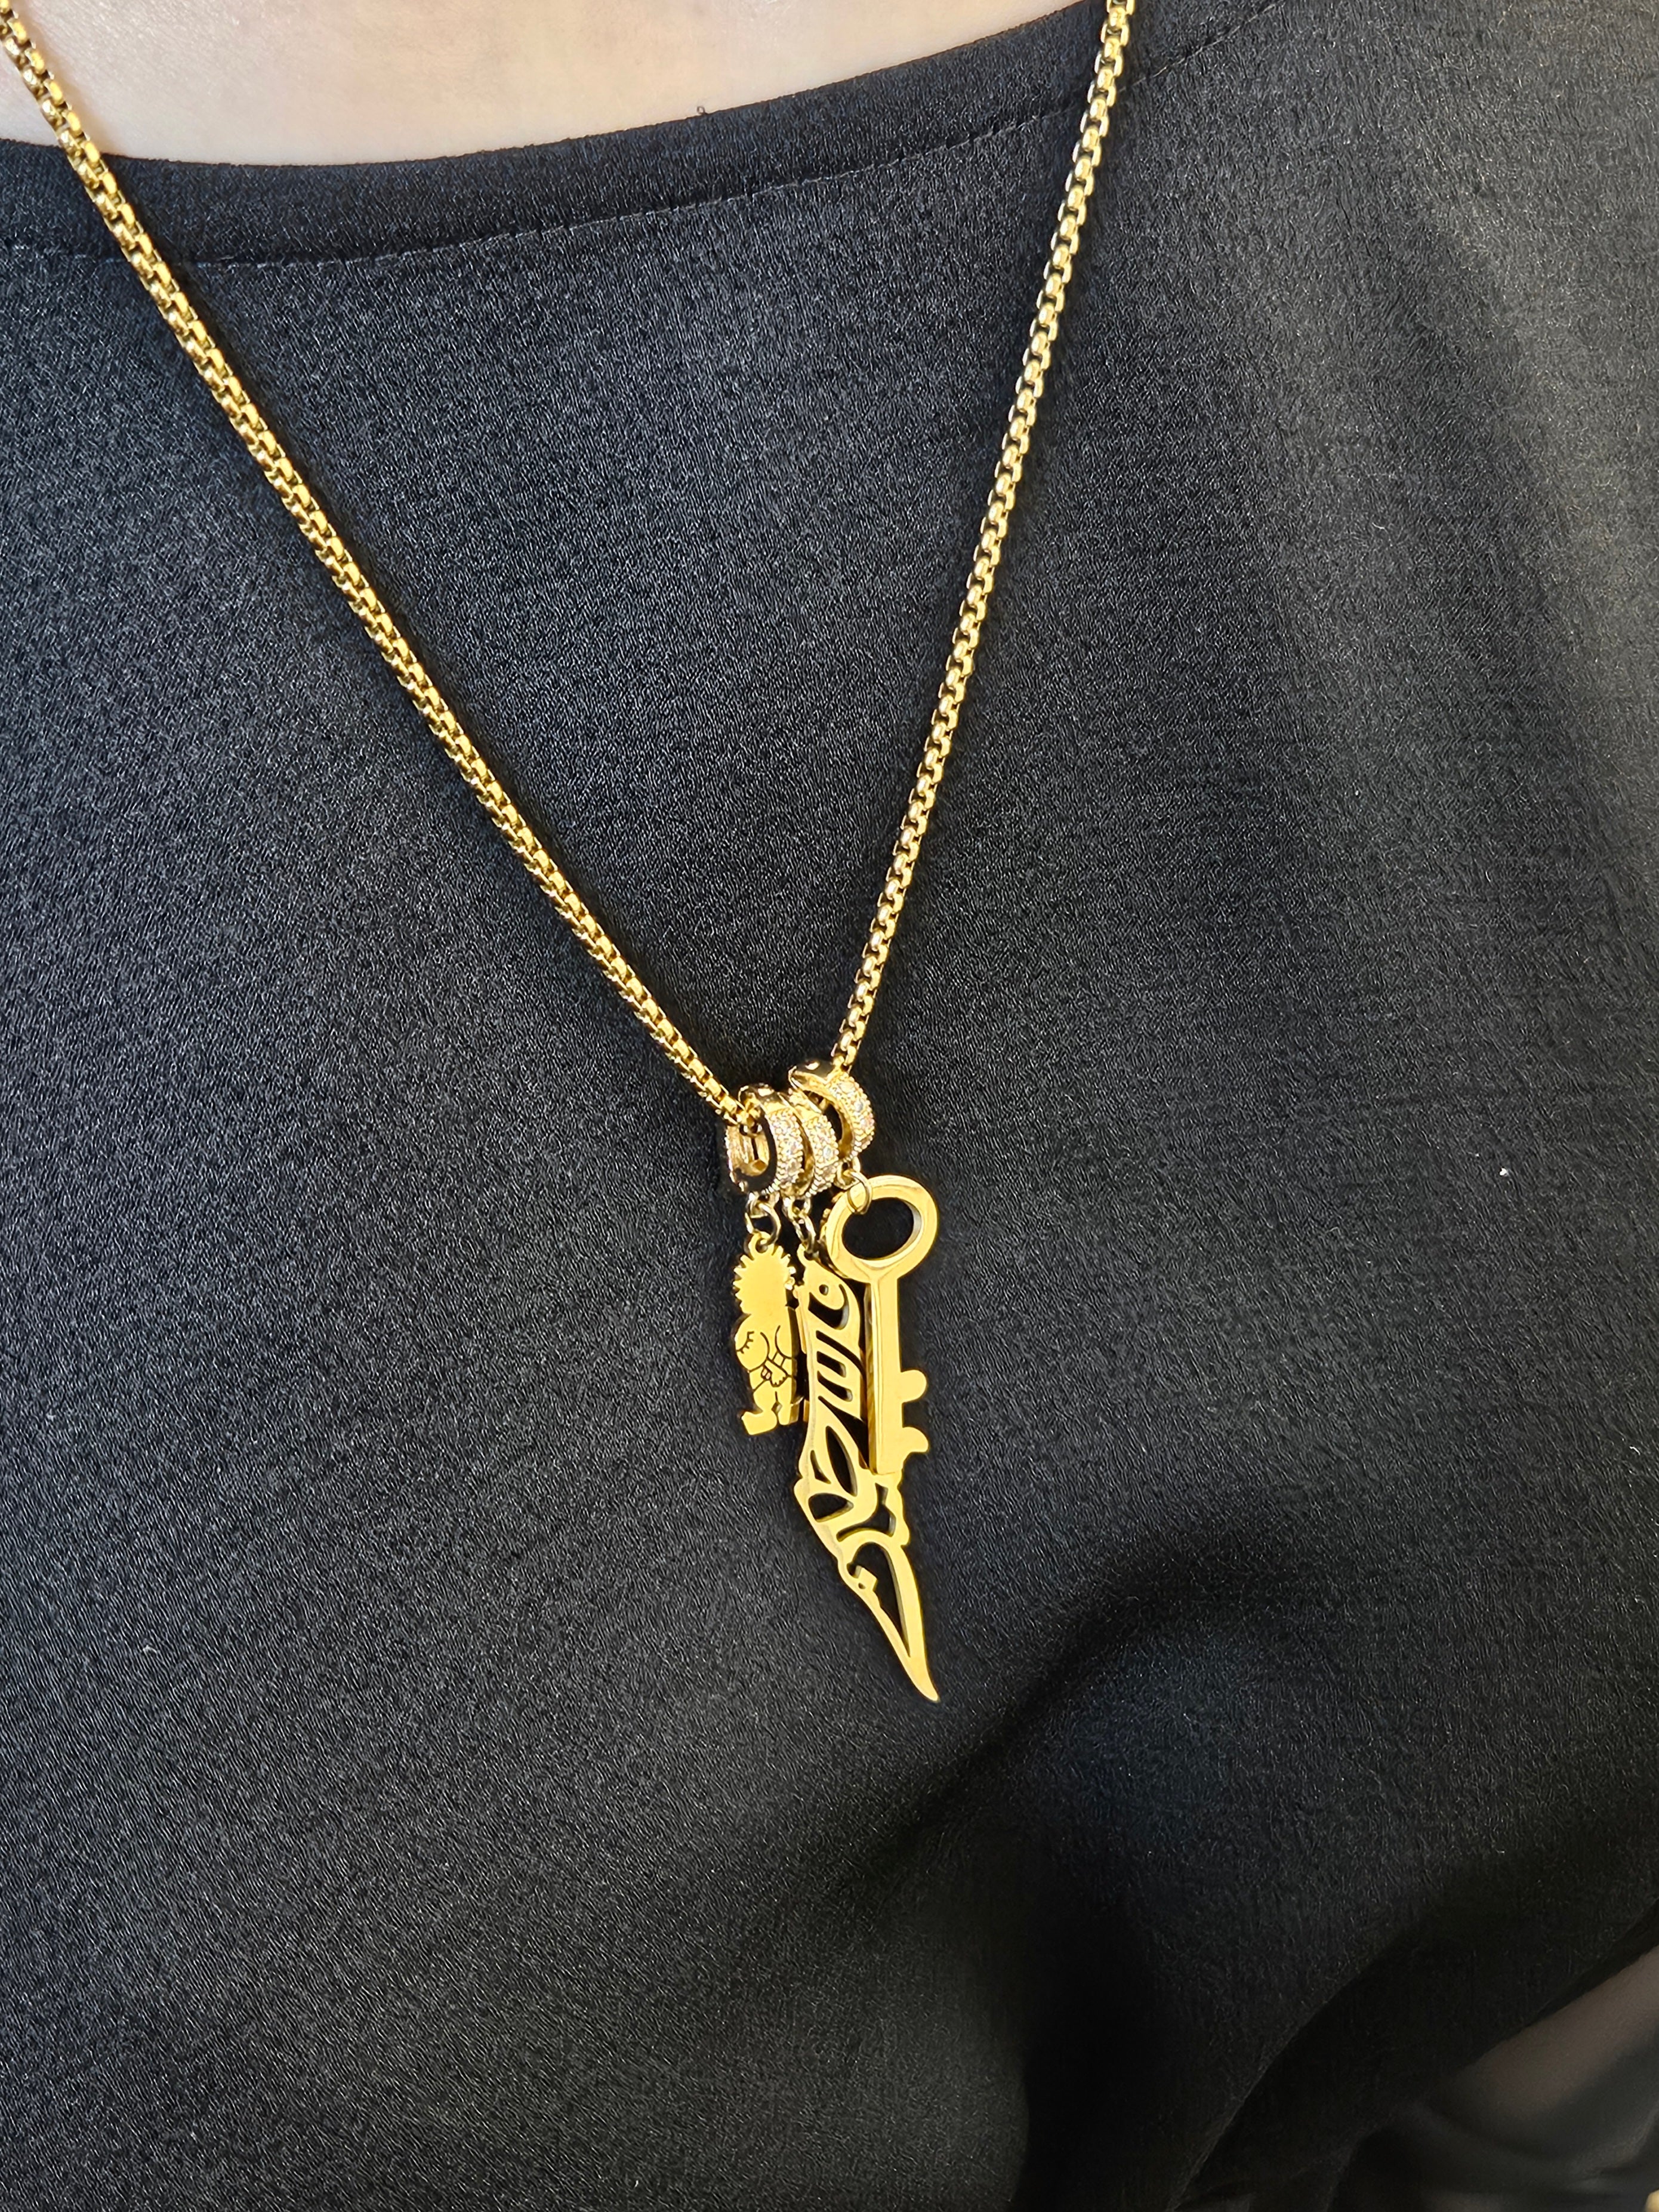 Palestine Handala Key Charm Necklace